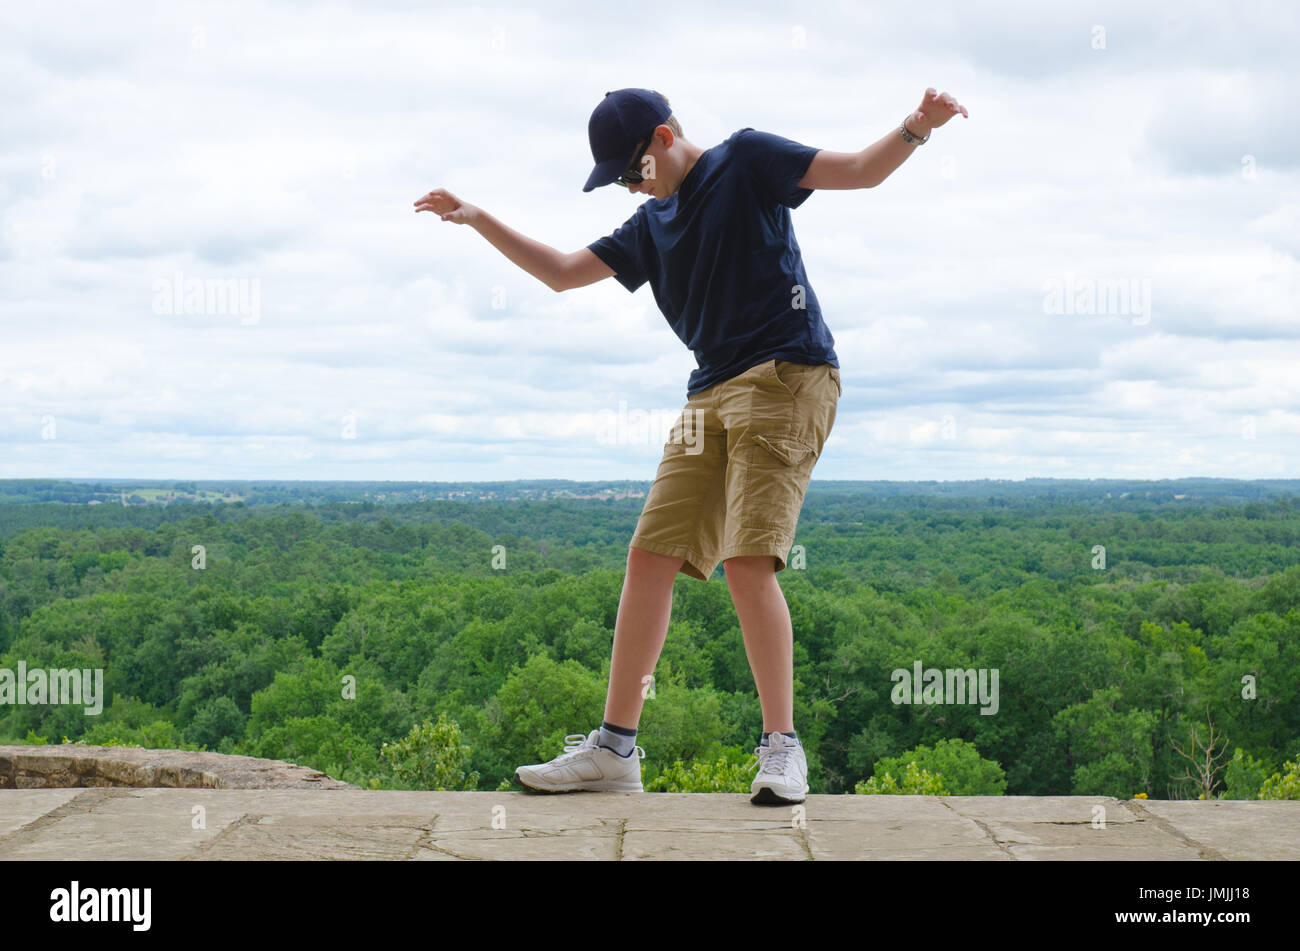 Boy balancing on the edge of a drop - danger concept Stock Photo